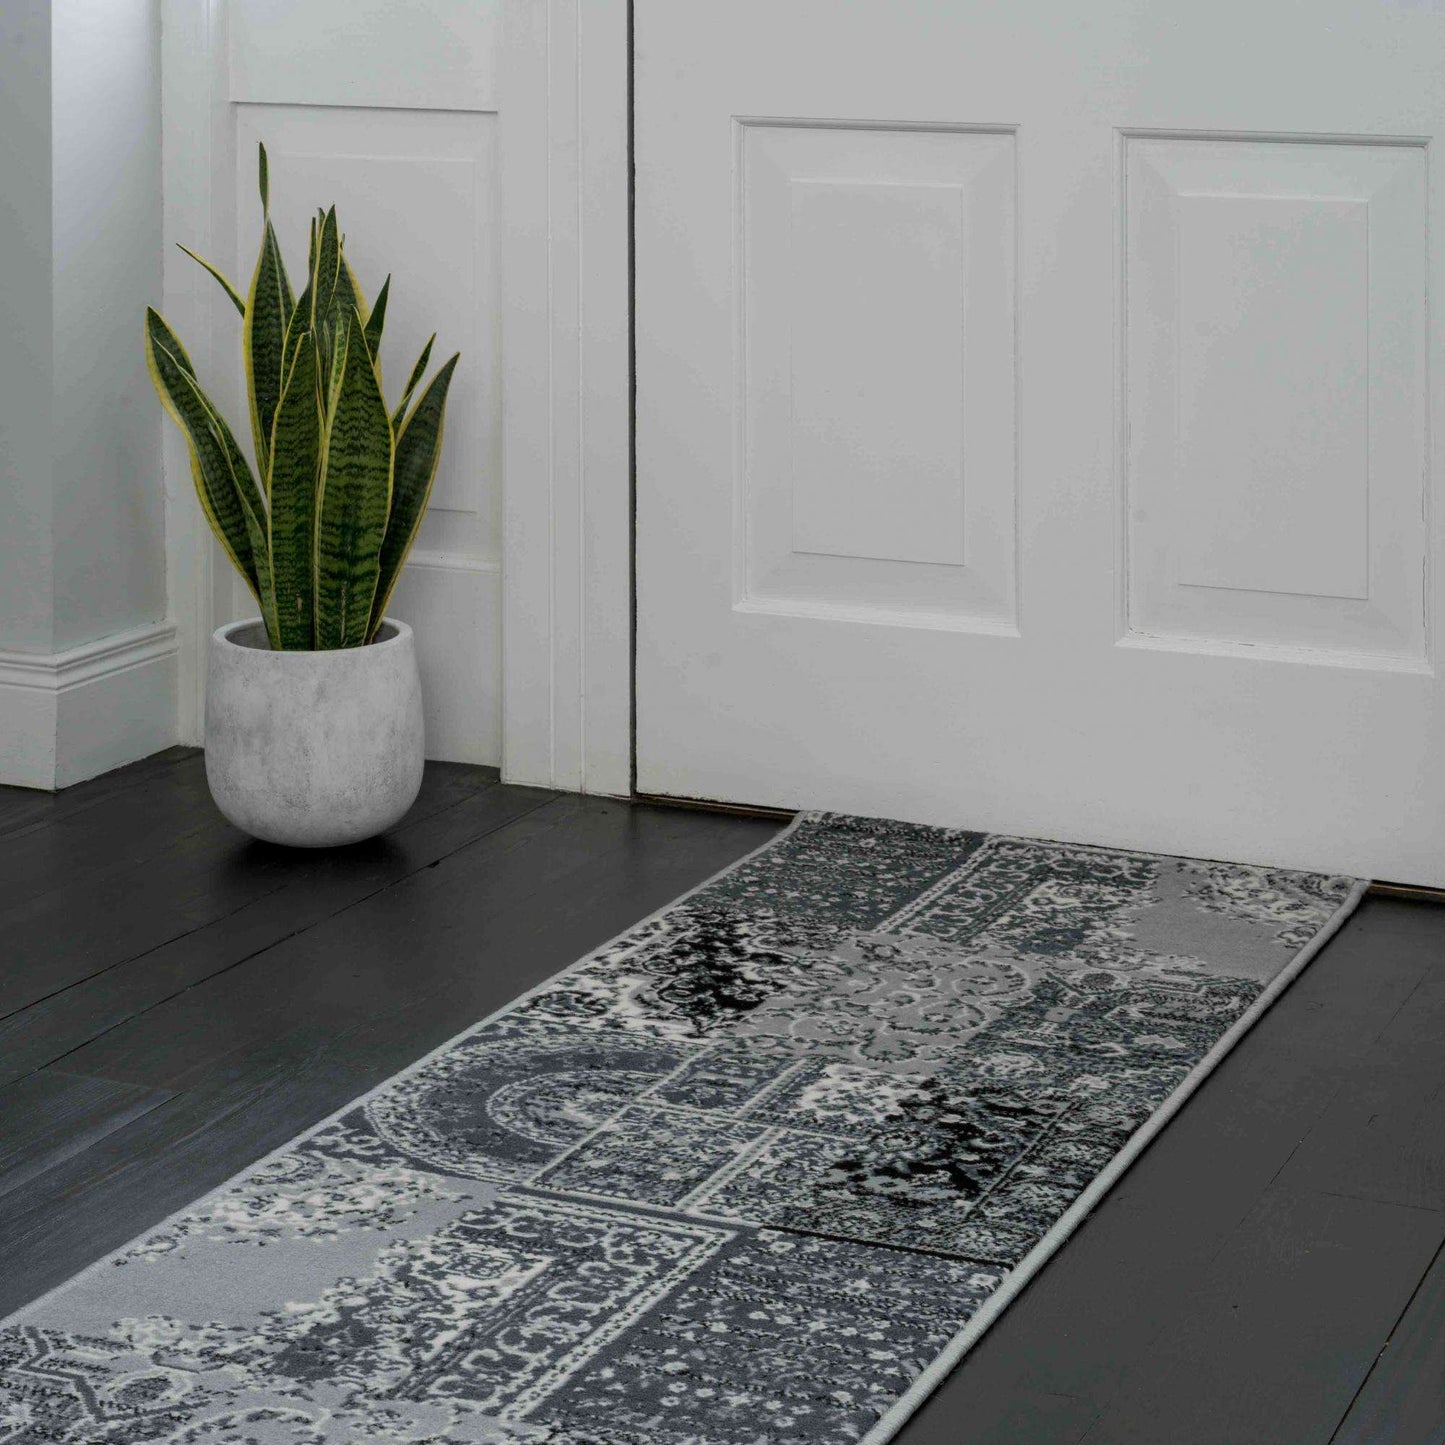 Black Grey Traditional Patchwork Living Room Rug